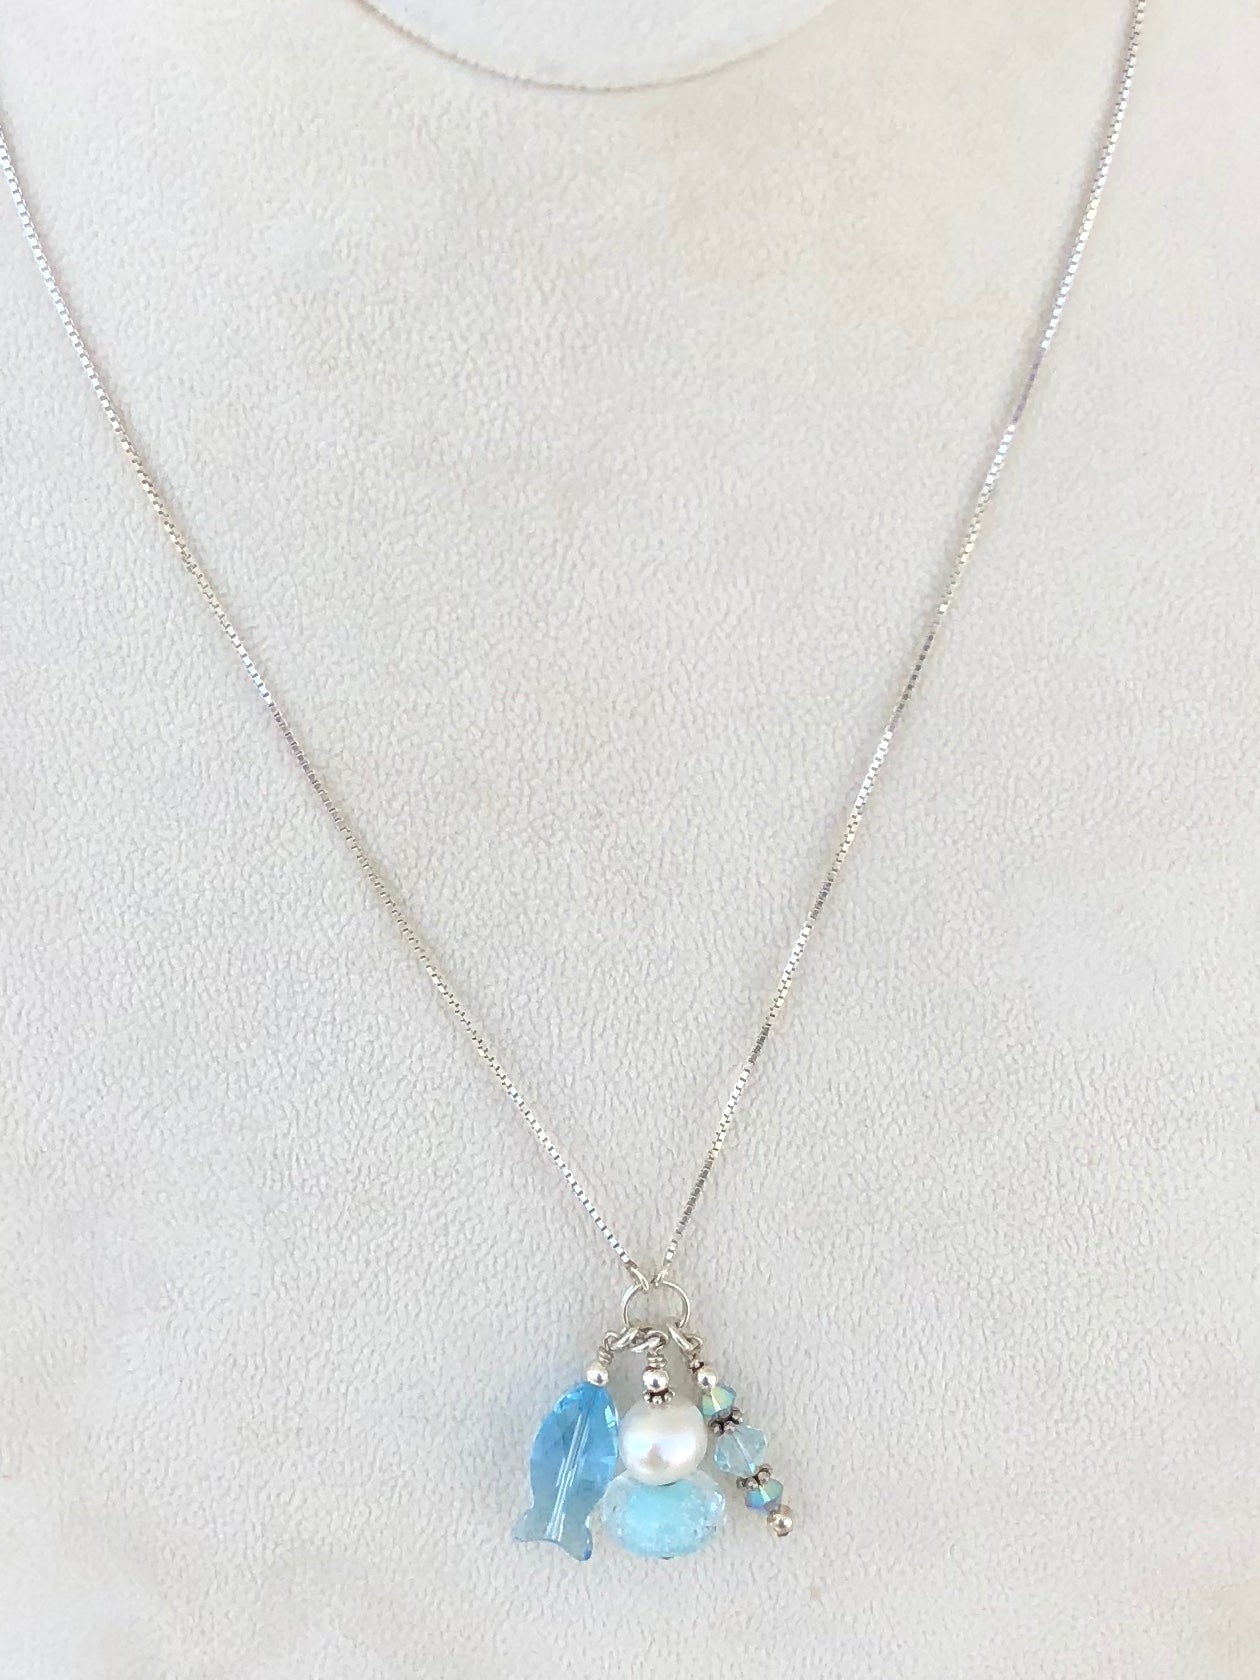 Destin Sand Bead Swarovski Crystal and Pearl Charm Necklace, Sea Turtle or Fish